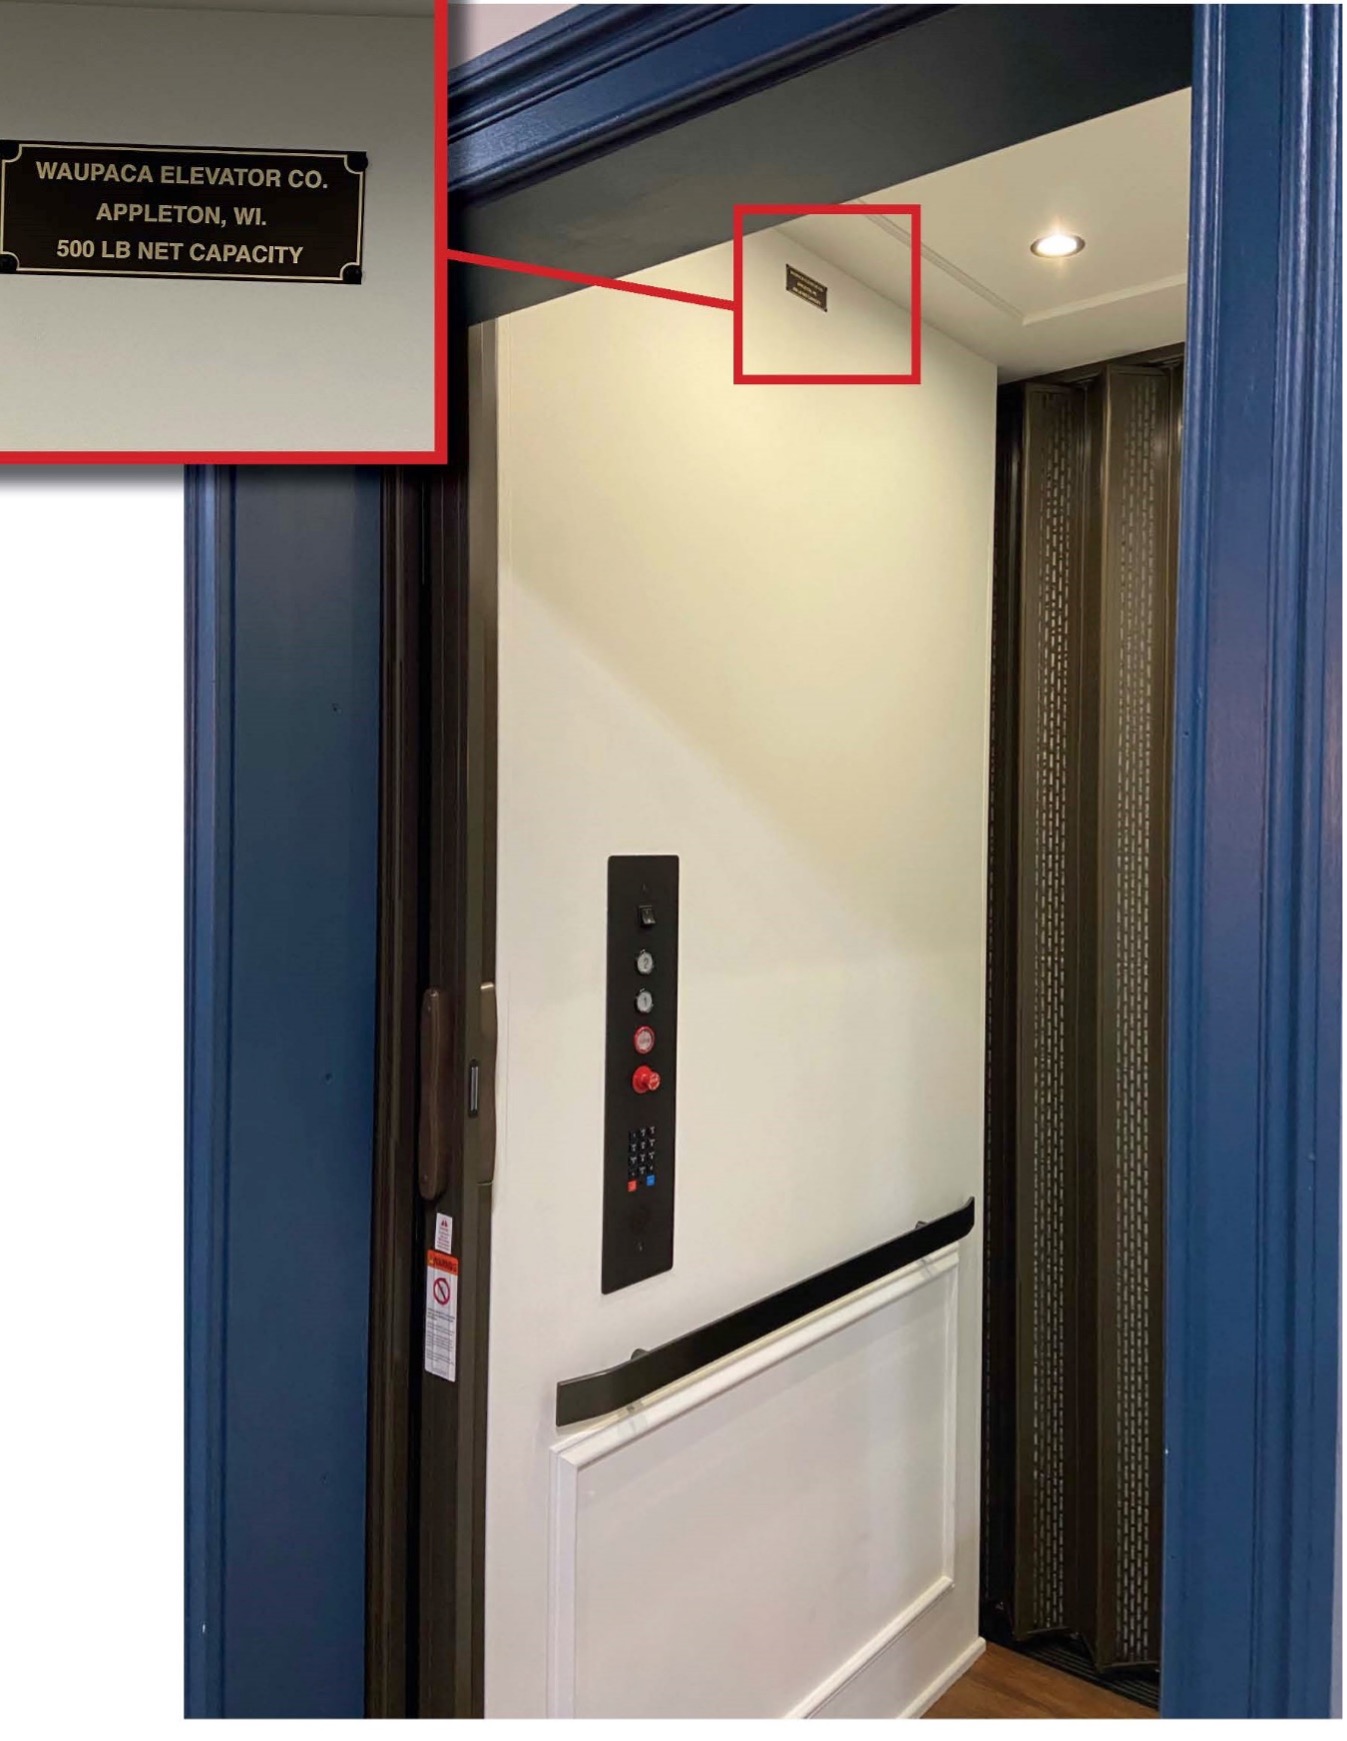 Recalled Waupaca residential elevator, Custom Lift model with label